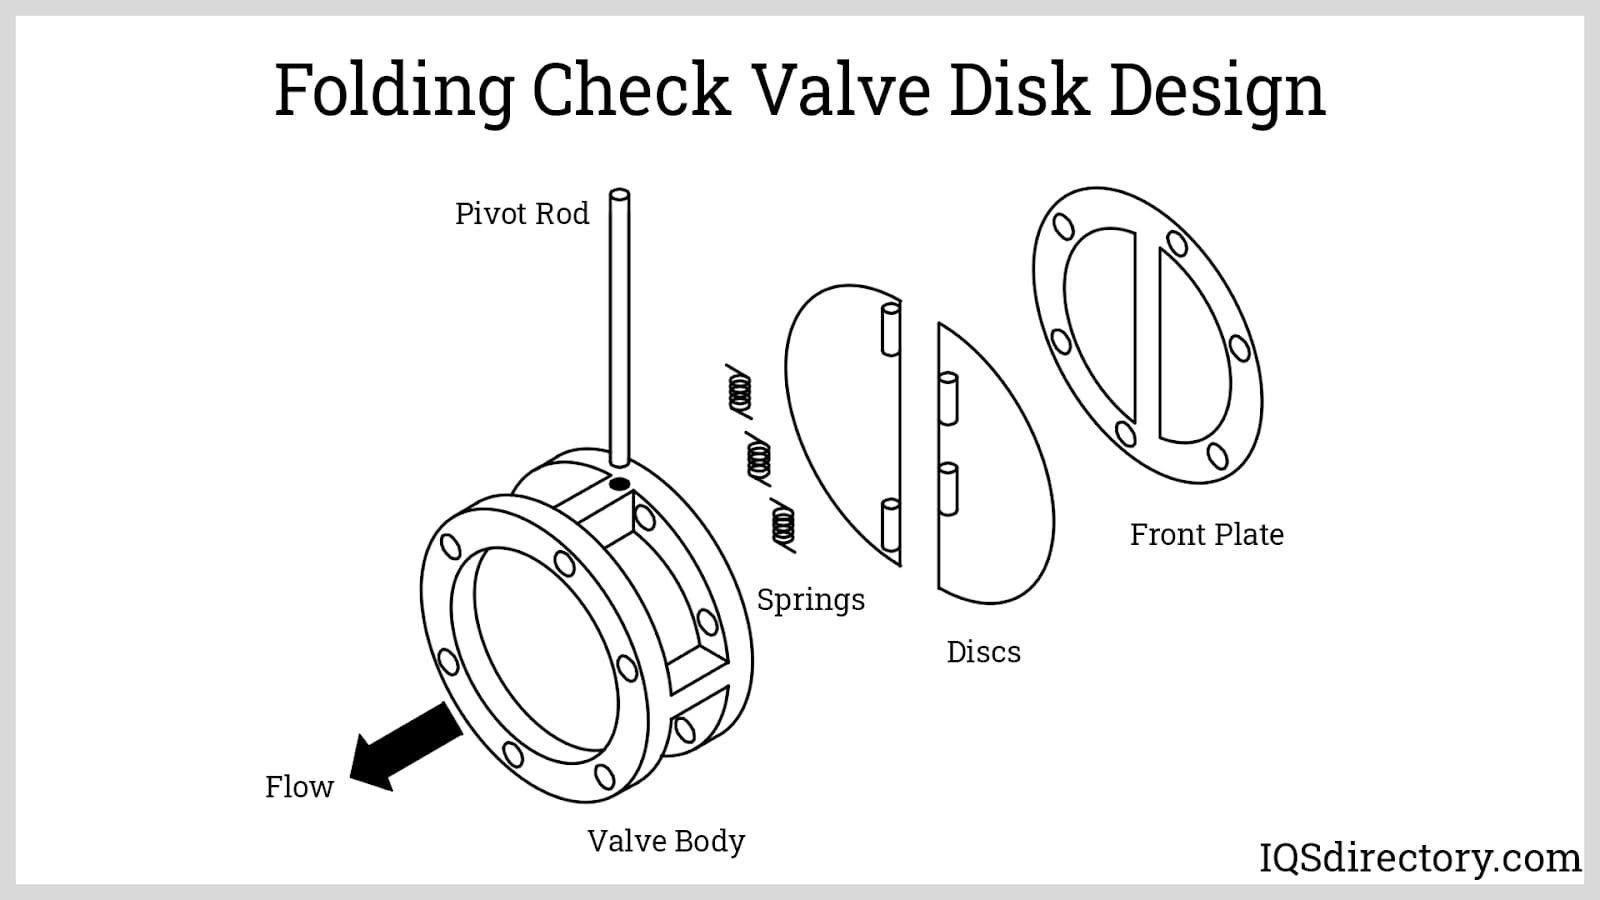 Folding Check Valve Disk Design